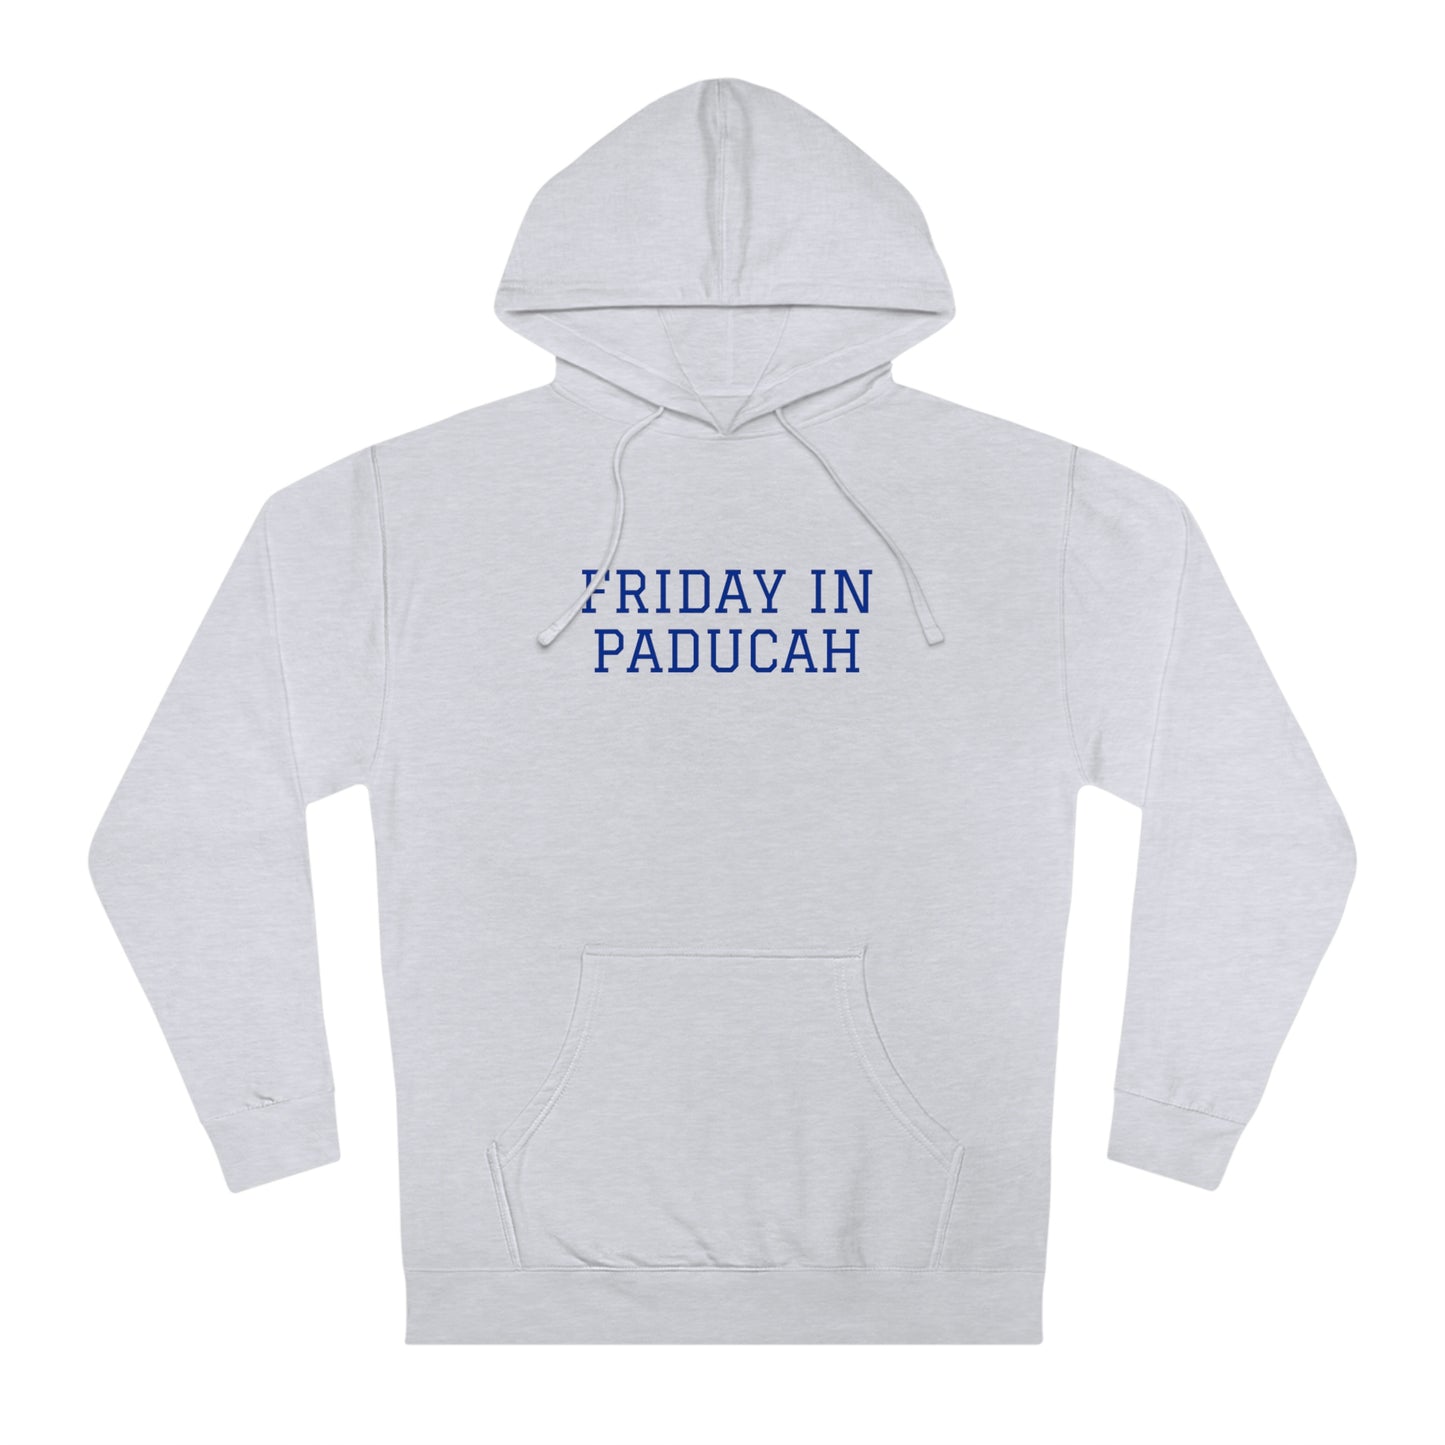 Paducah Hooded Sweatshirt - GG